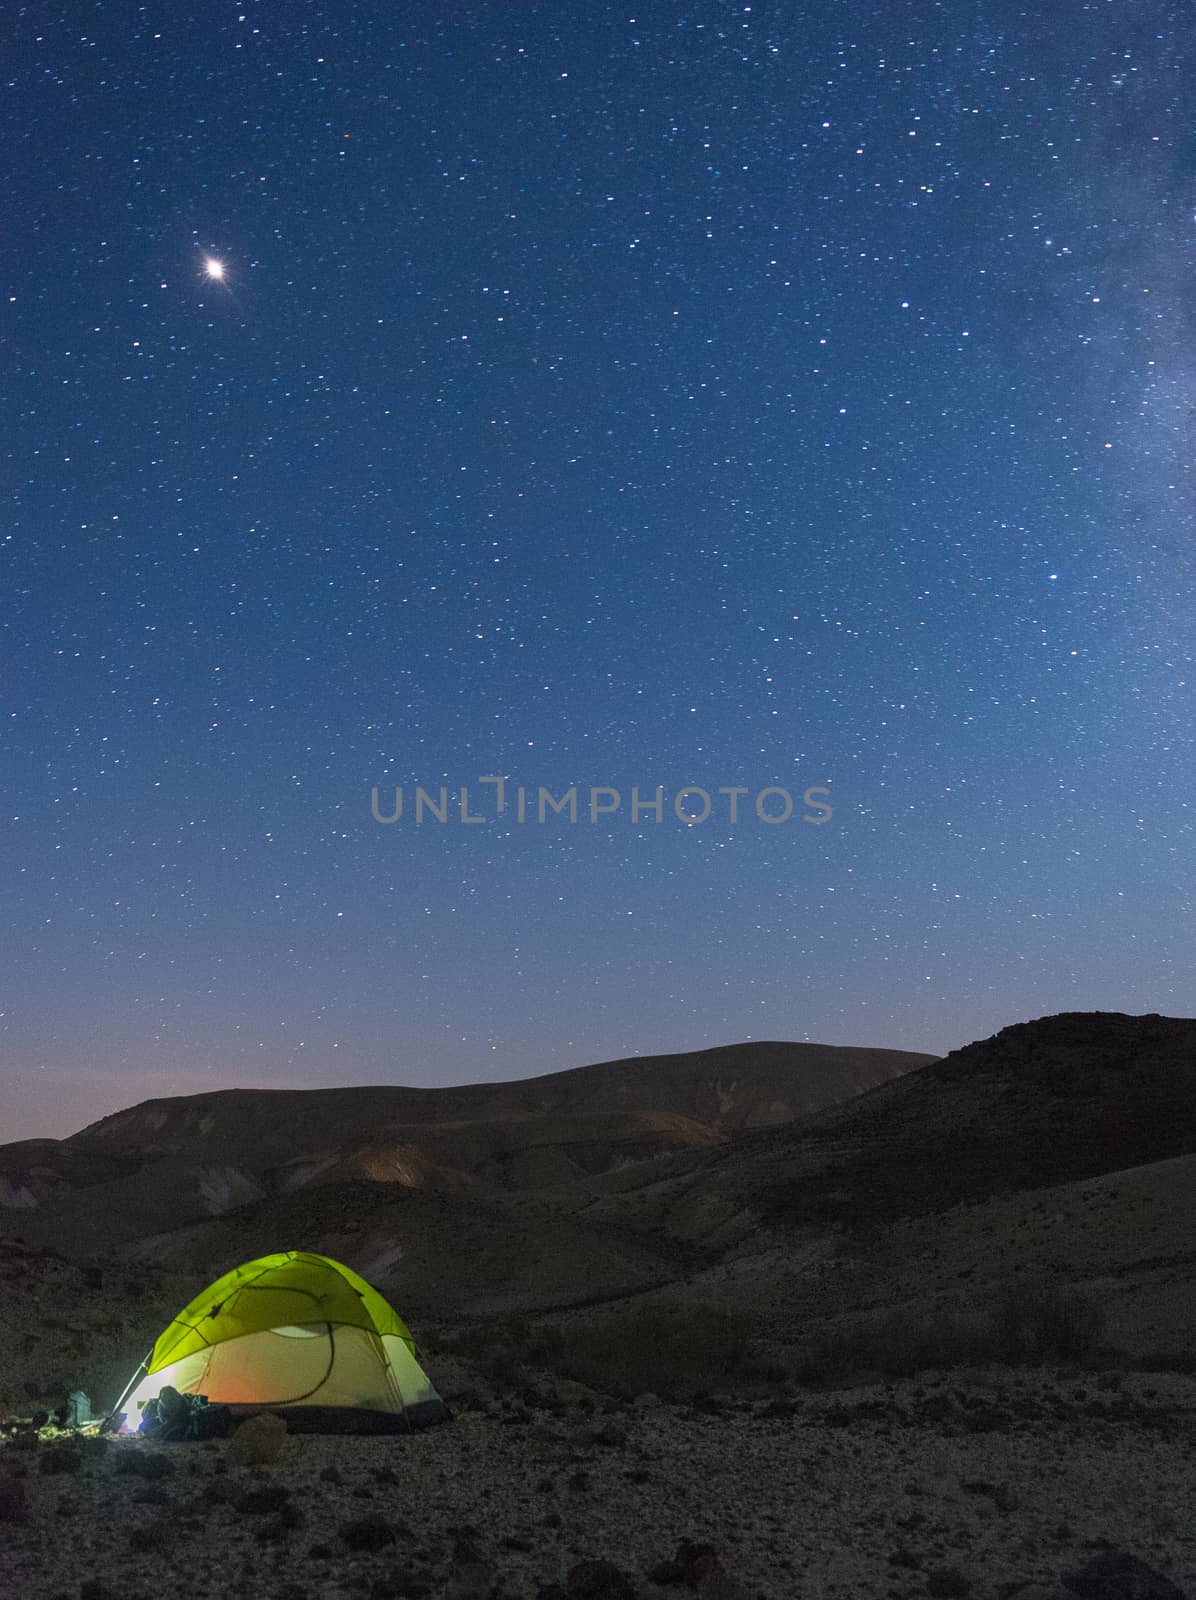 Tent under stars in desert vacation by javax